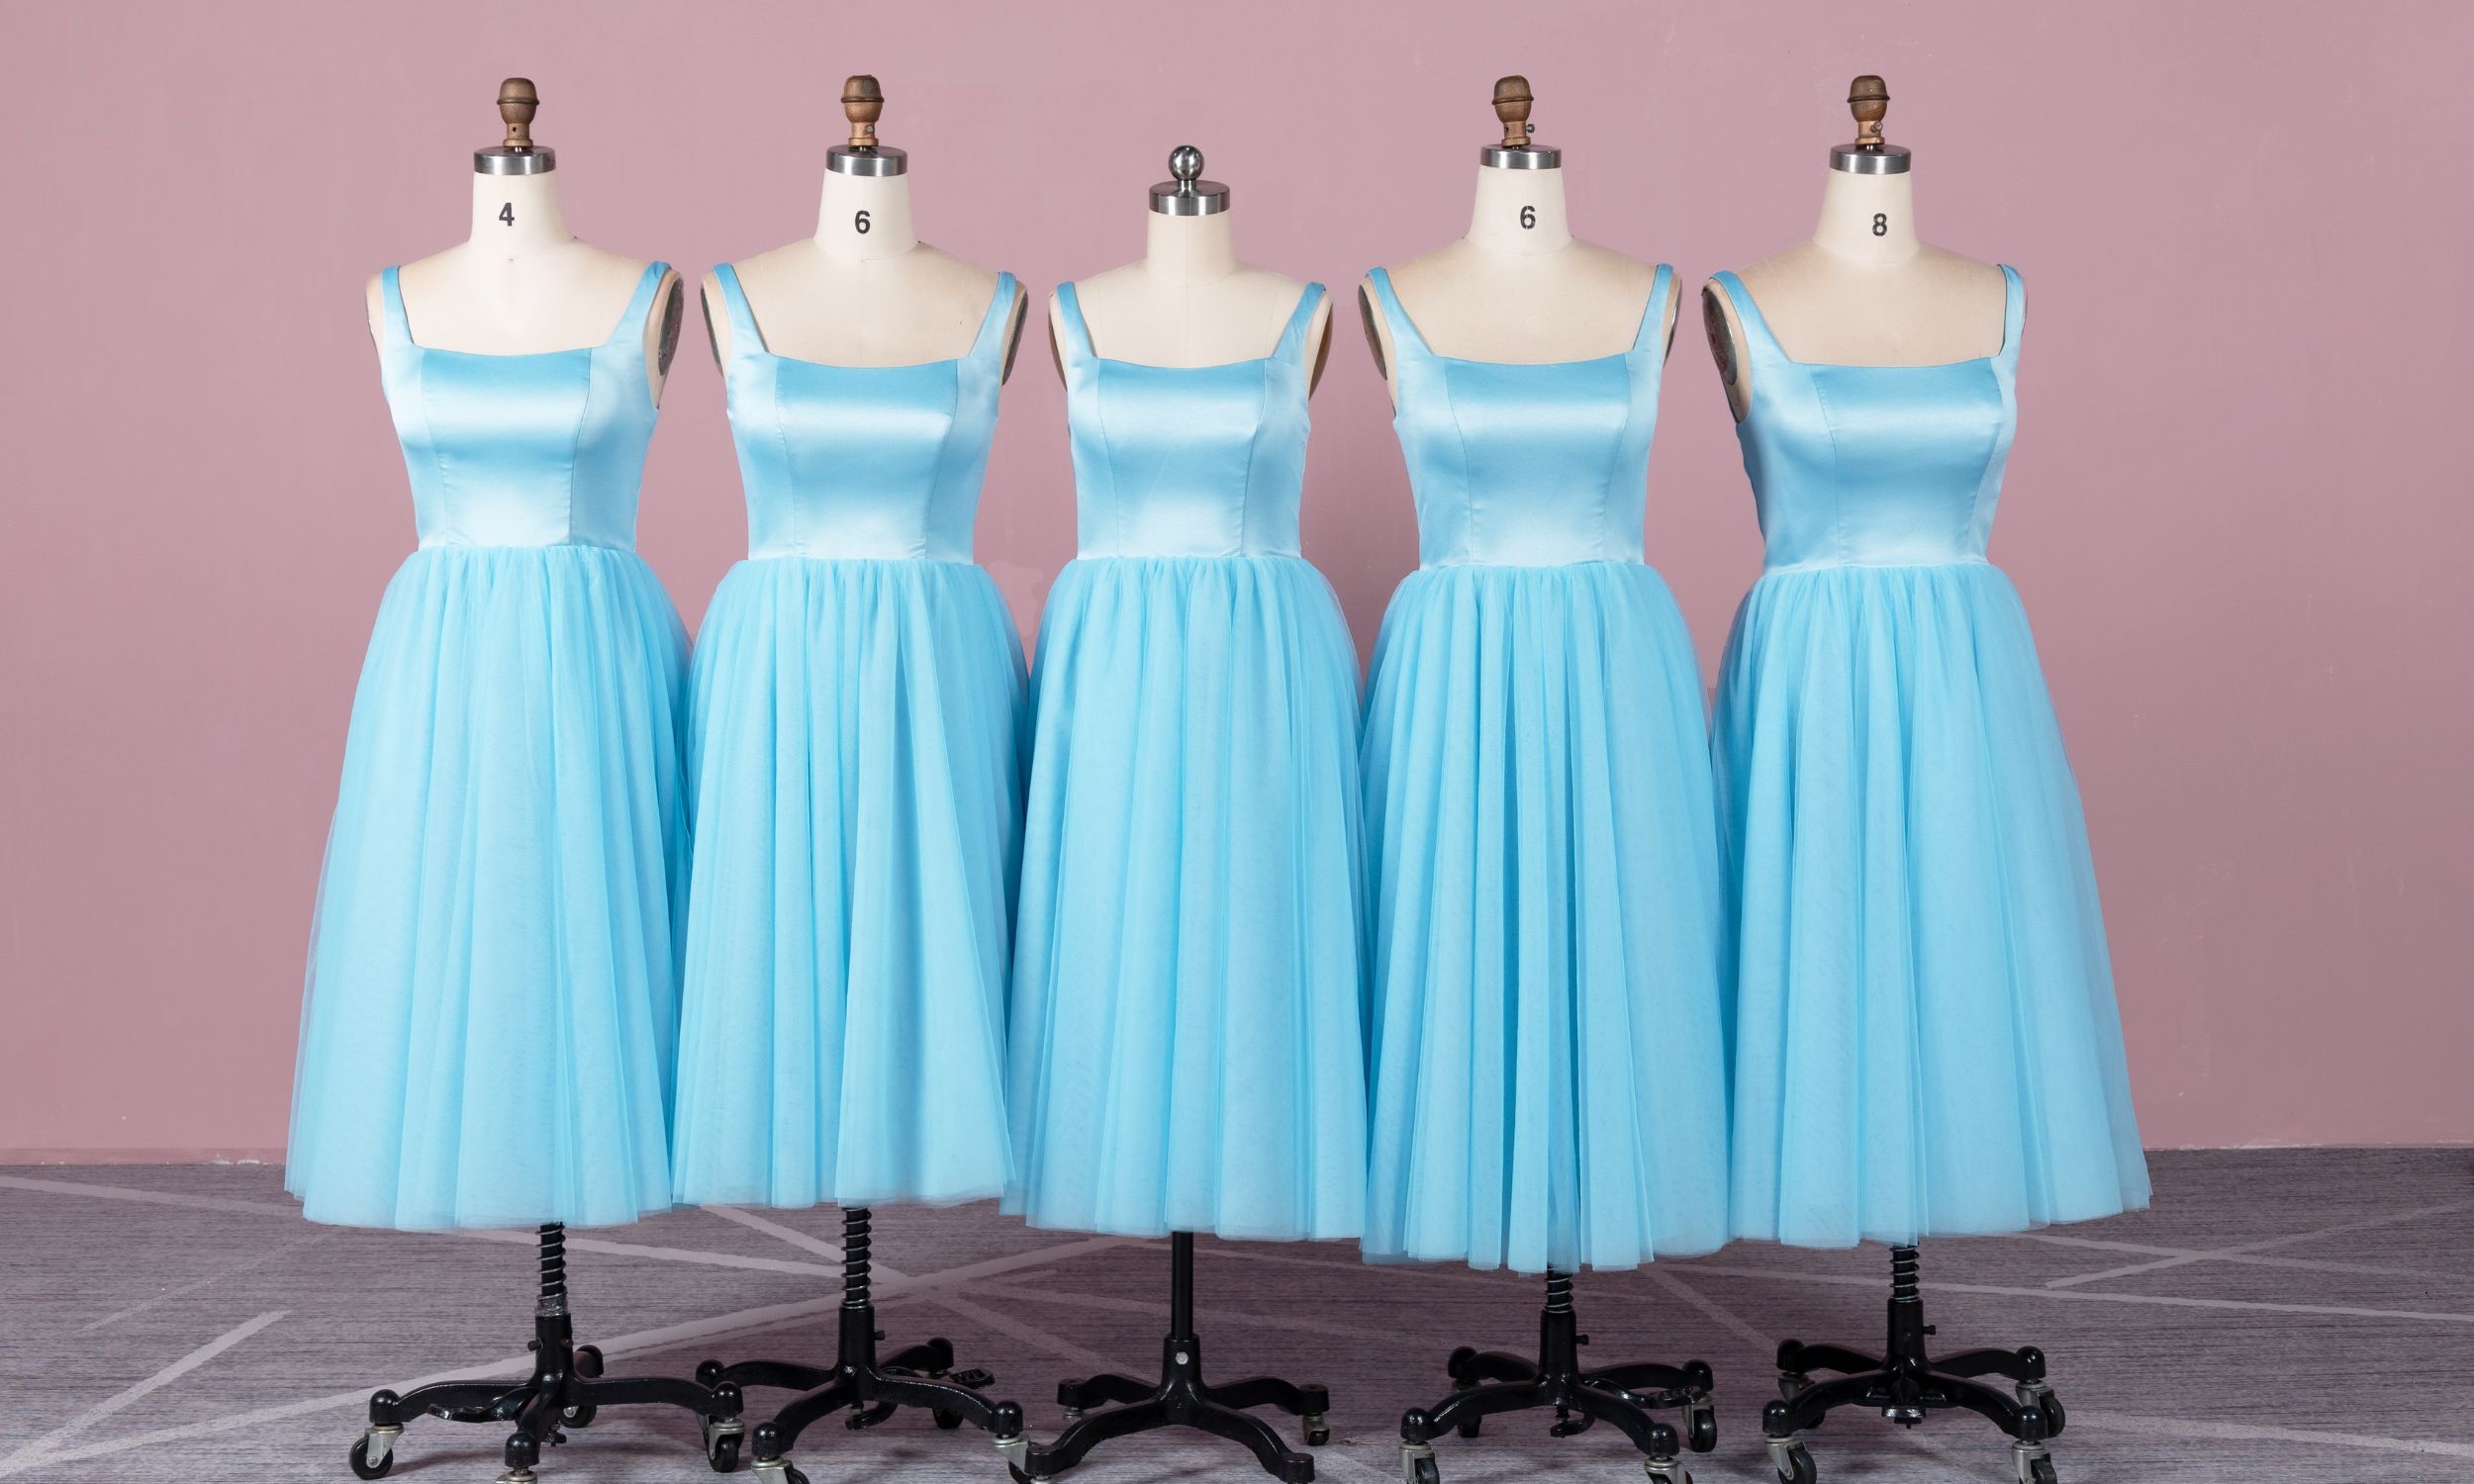 Five blue dresses on dress forms, bridesmaid dresses.